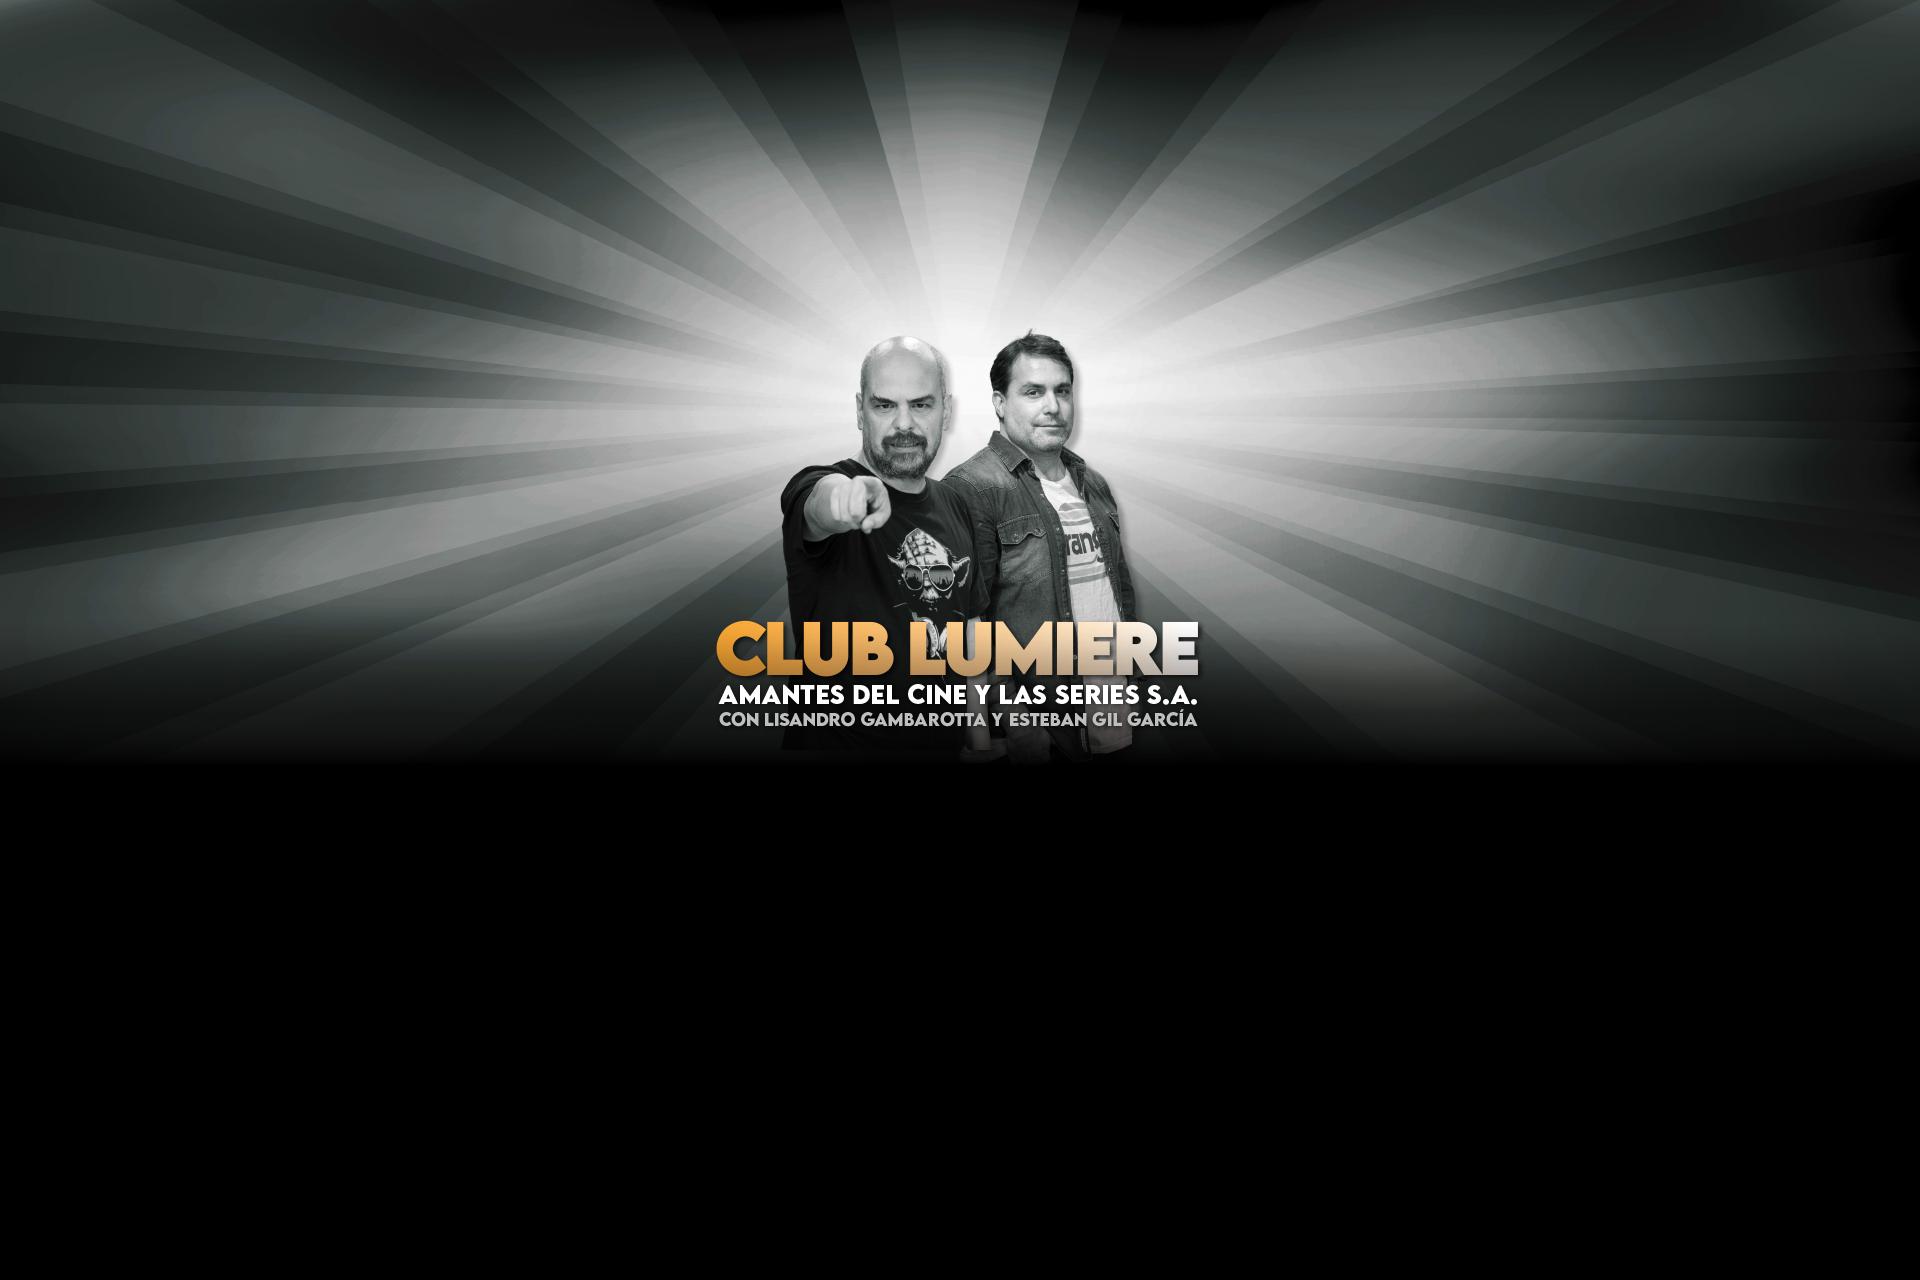 CLUB LUMIERE